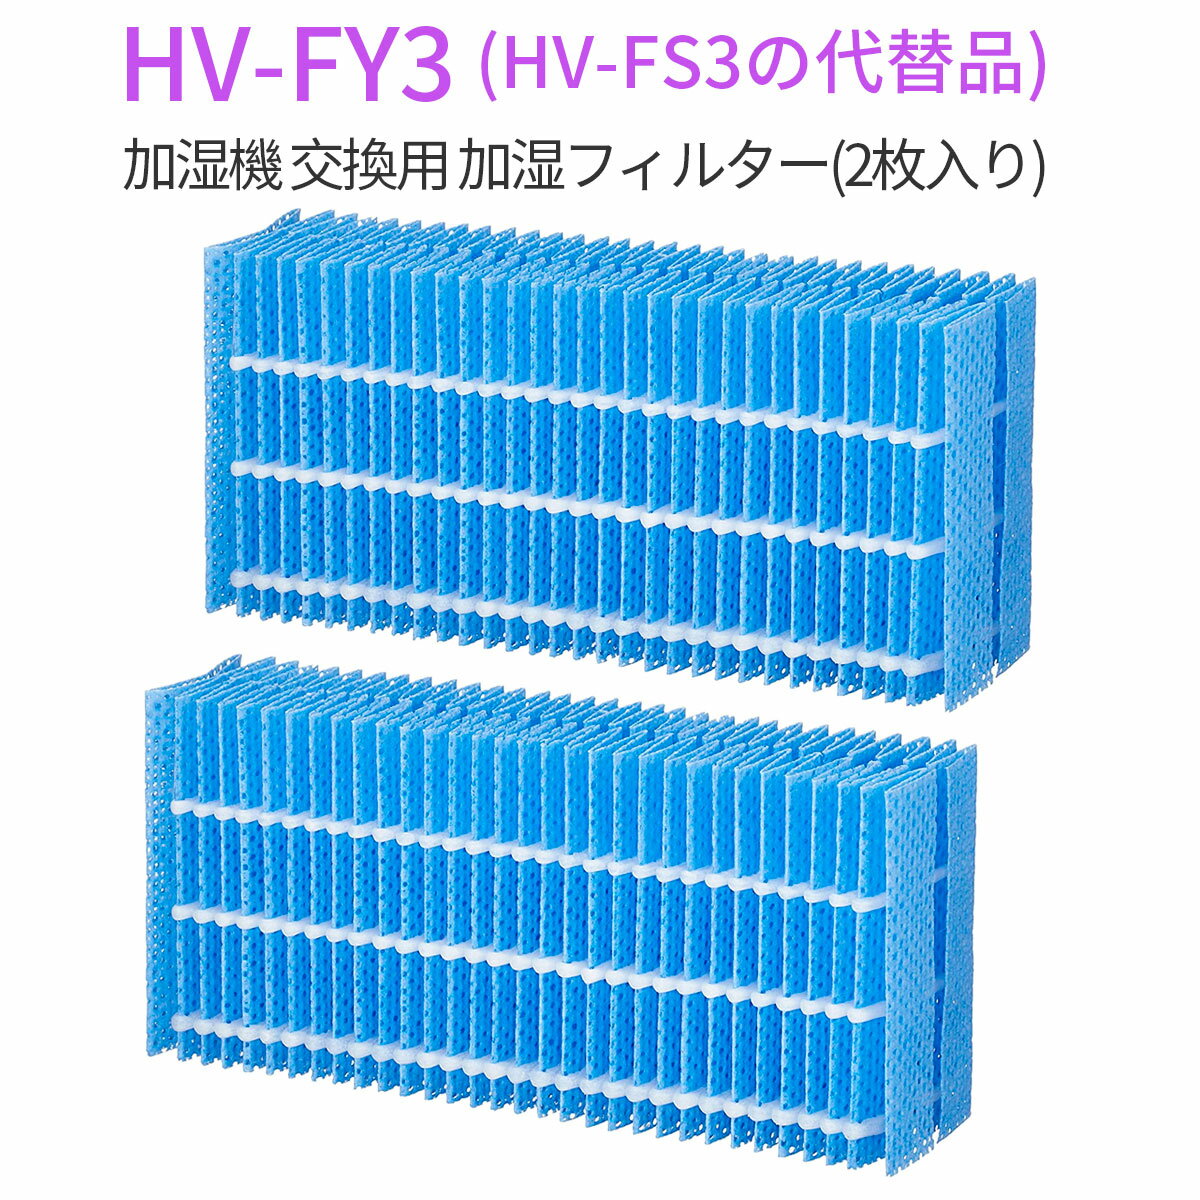 hv-fy3 加湿フィルター HV-FY3 加湿器 フィルター HV-FS3の代替品 シャープ 気化式加湿機用 交換フィルター (互換品/2枚入り)